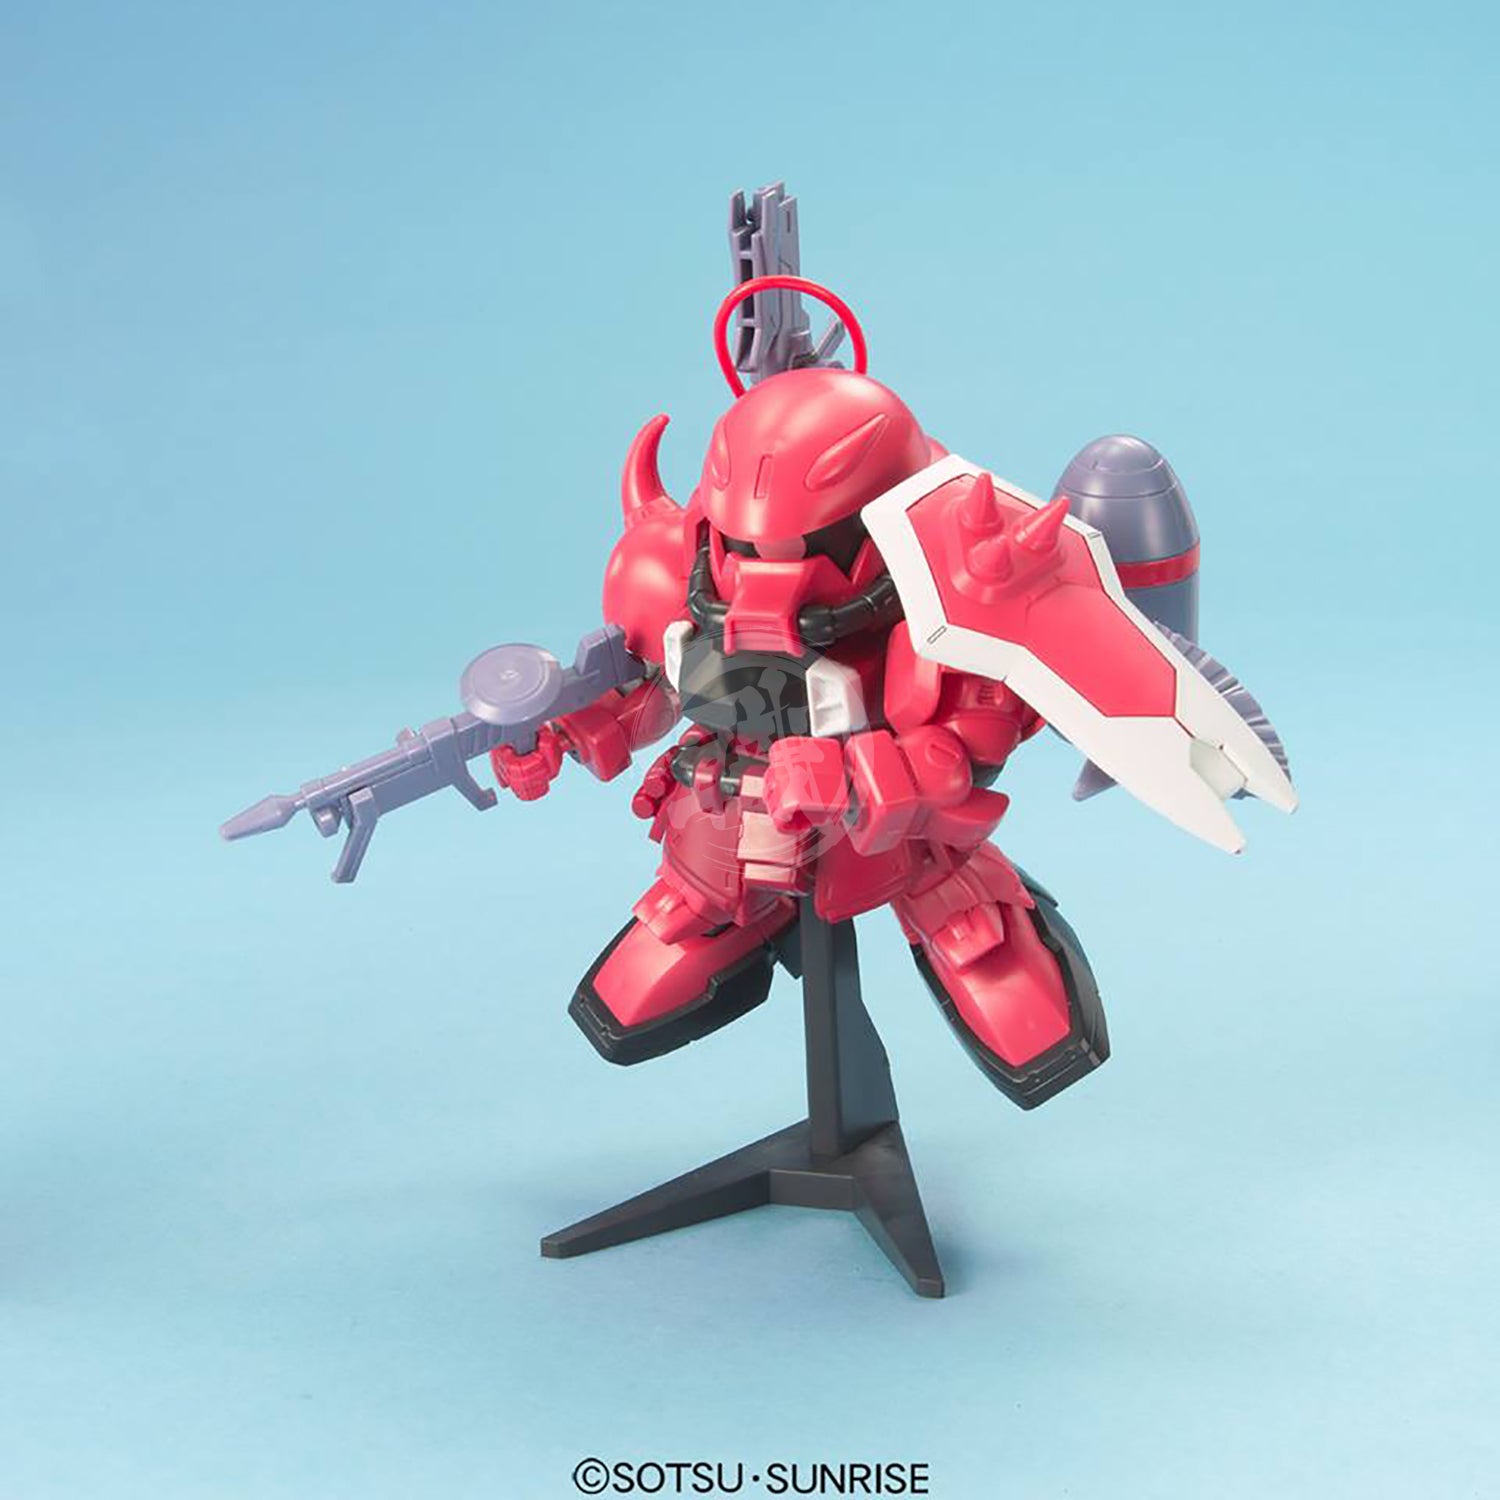 SD Gunner Zaku Warrior [Lunamaria Hawk Custom] [BB281] - ShokuninGunpla